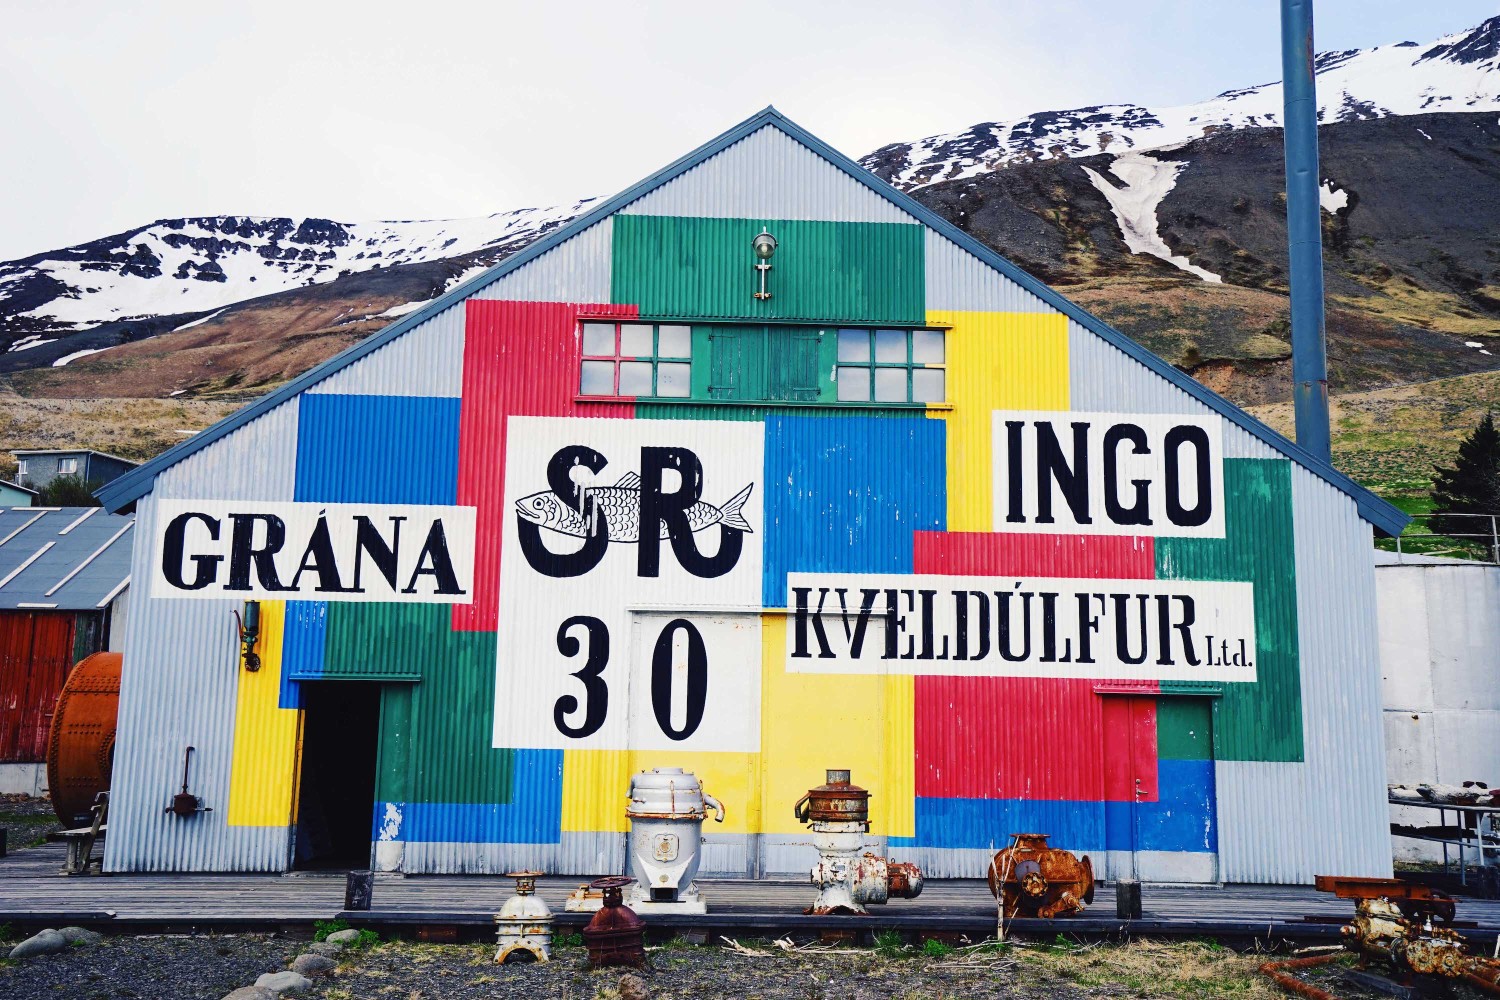 herrng-era-museum-siglufjörður-iceland-dante-vincent-photography-79